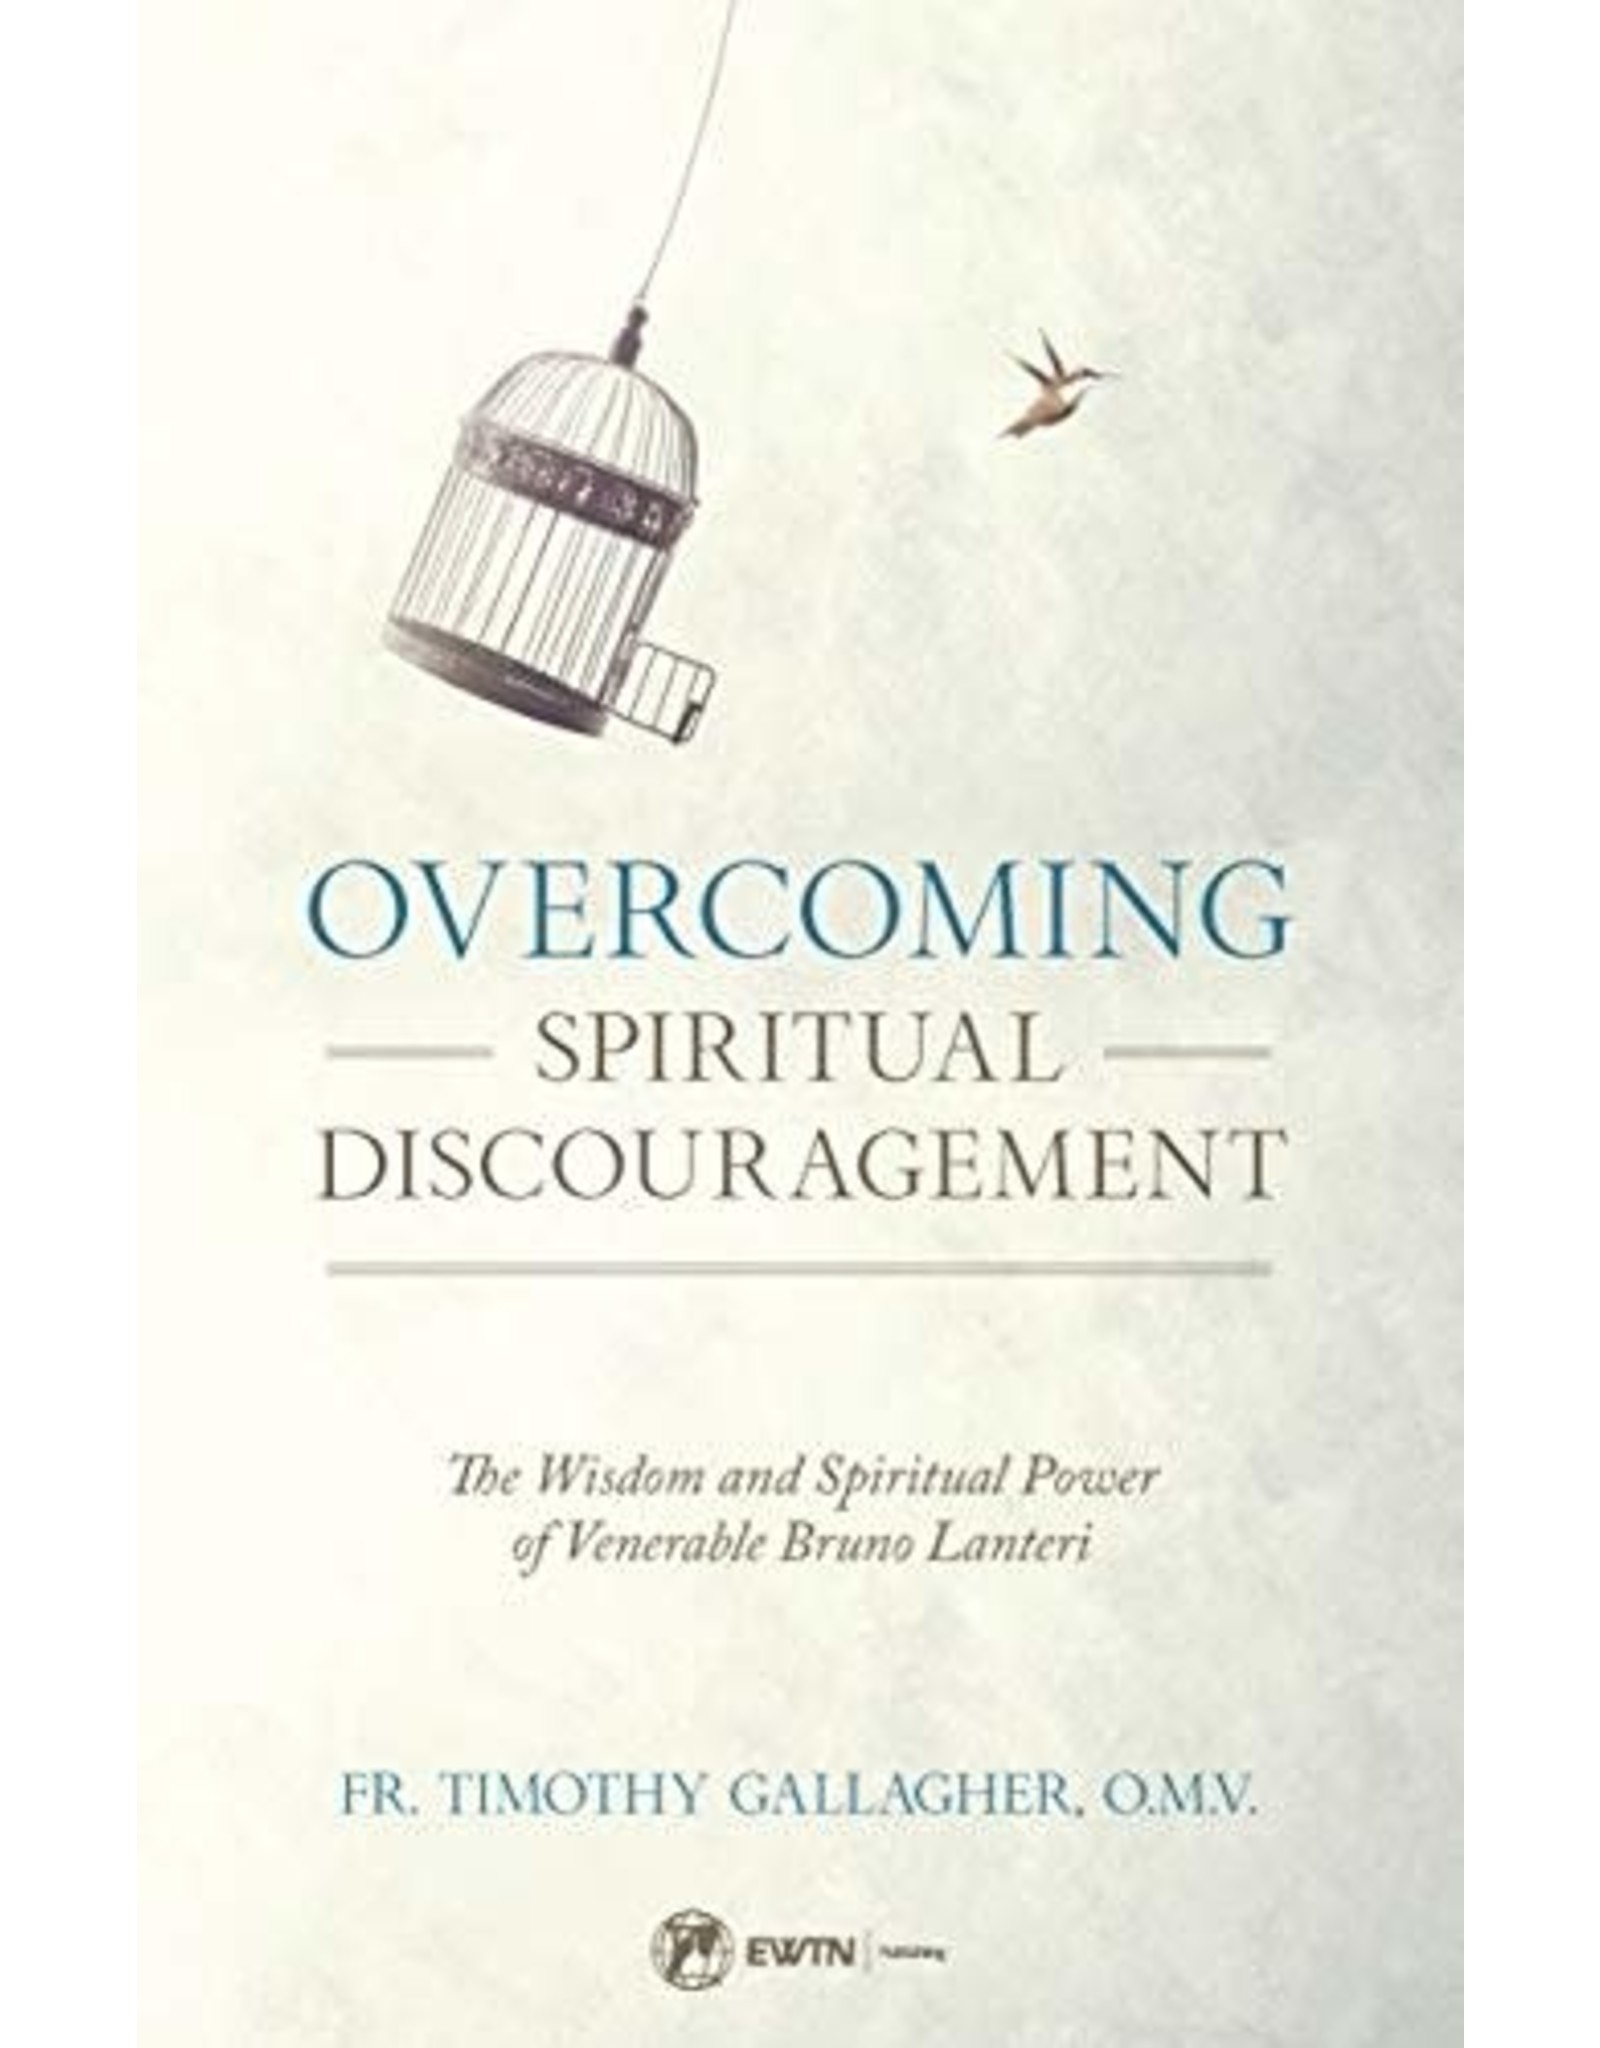 Sophia Press Overcoming Spiritual Discouragement: The Wisdom and Spiritual Power of Venerable Bruno Lanteri by Fr. Timothy Gallagher, O.M.V. (Paperback)